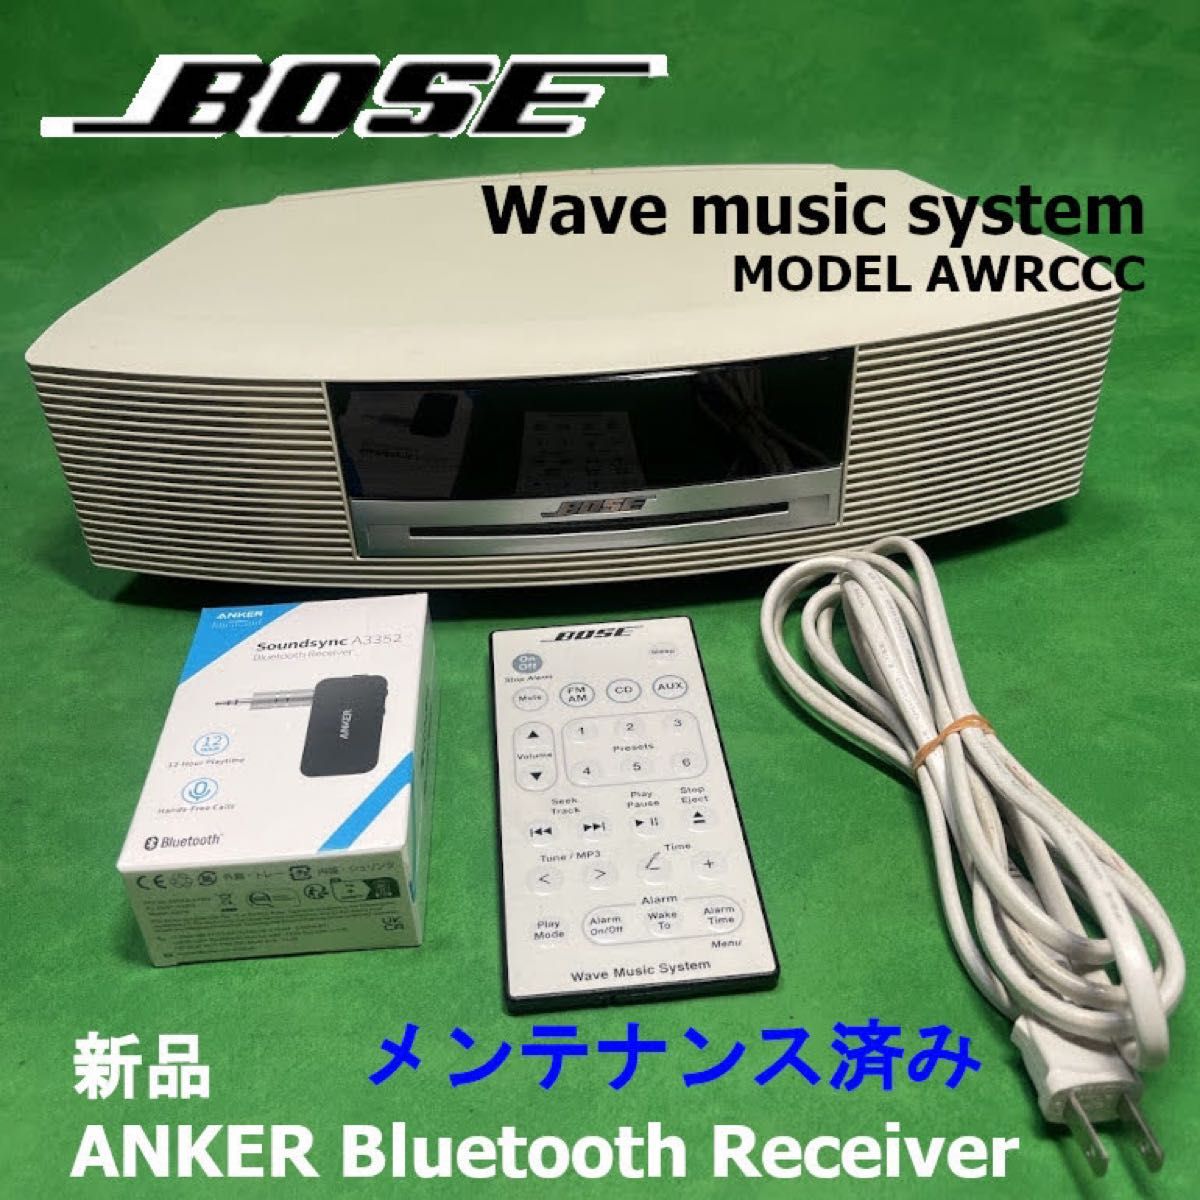 BOSE Wave music system AWRCCC オーディオプレーヤー｜PayPayフリマ